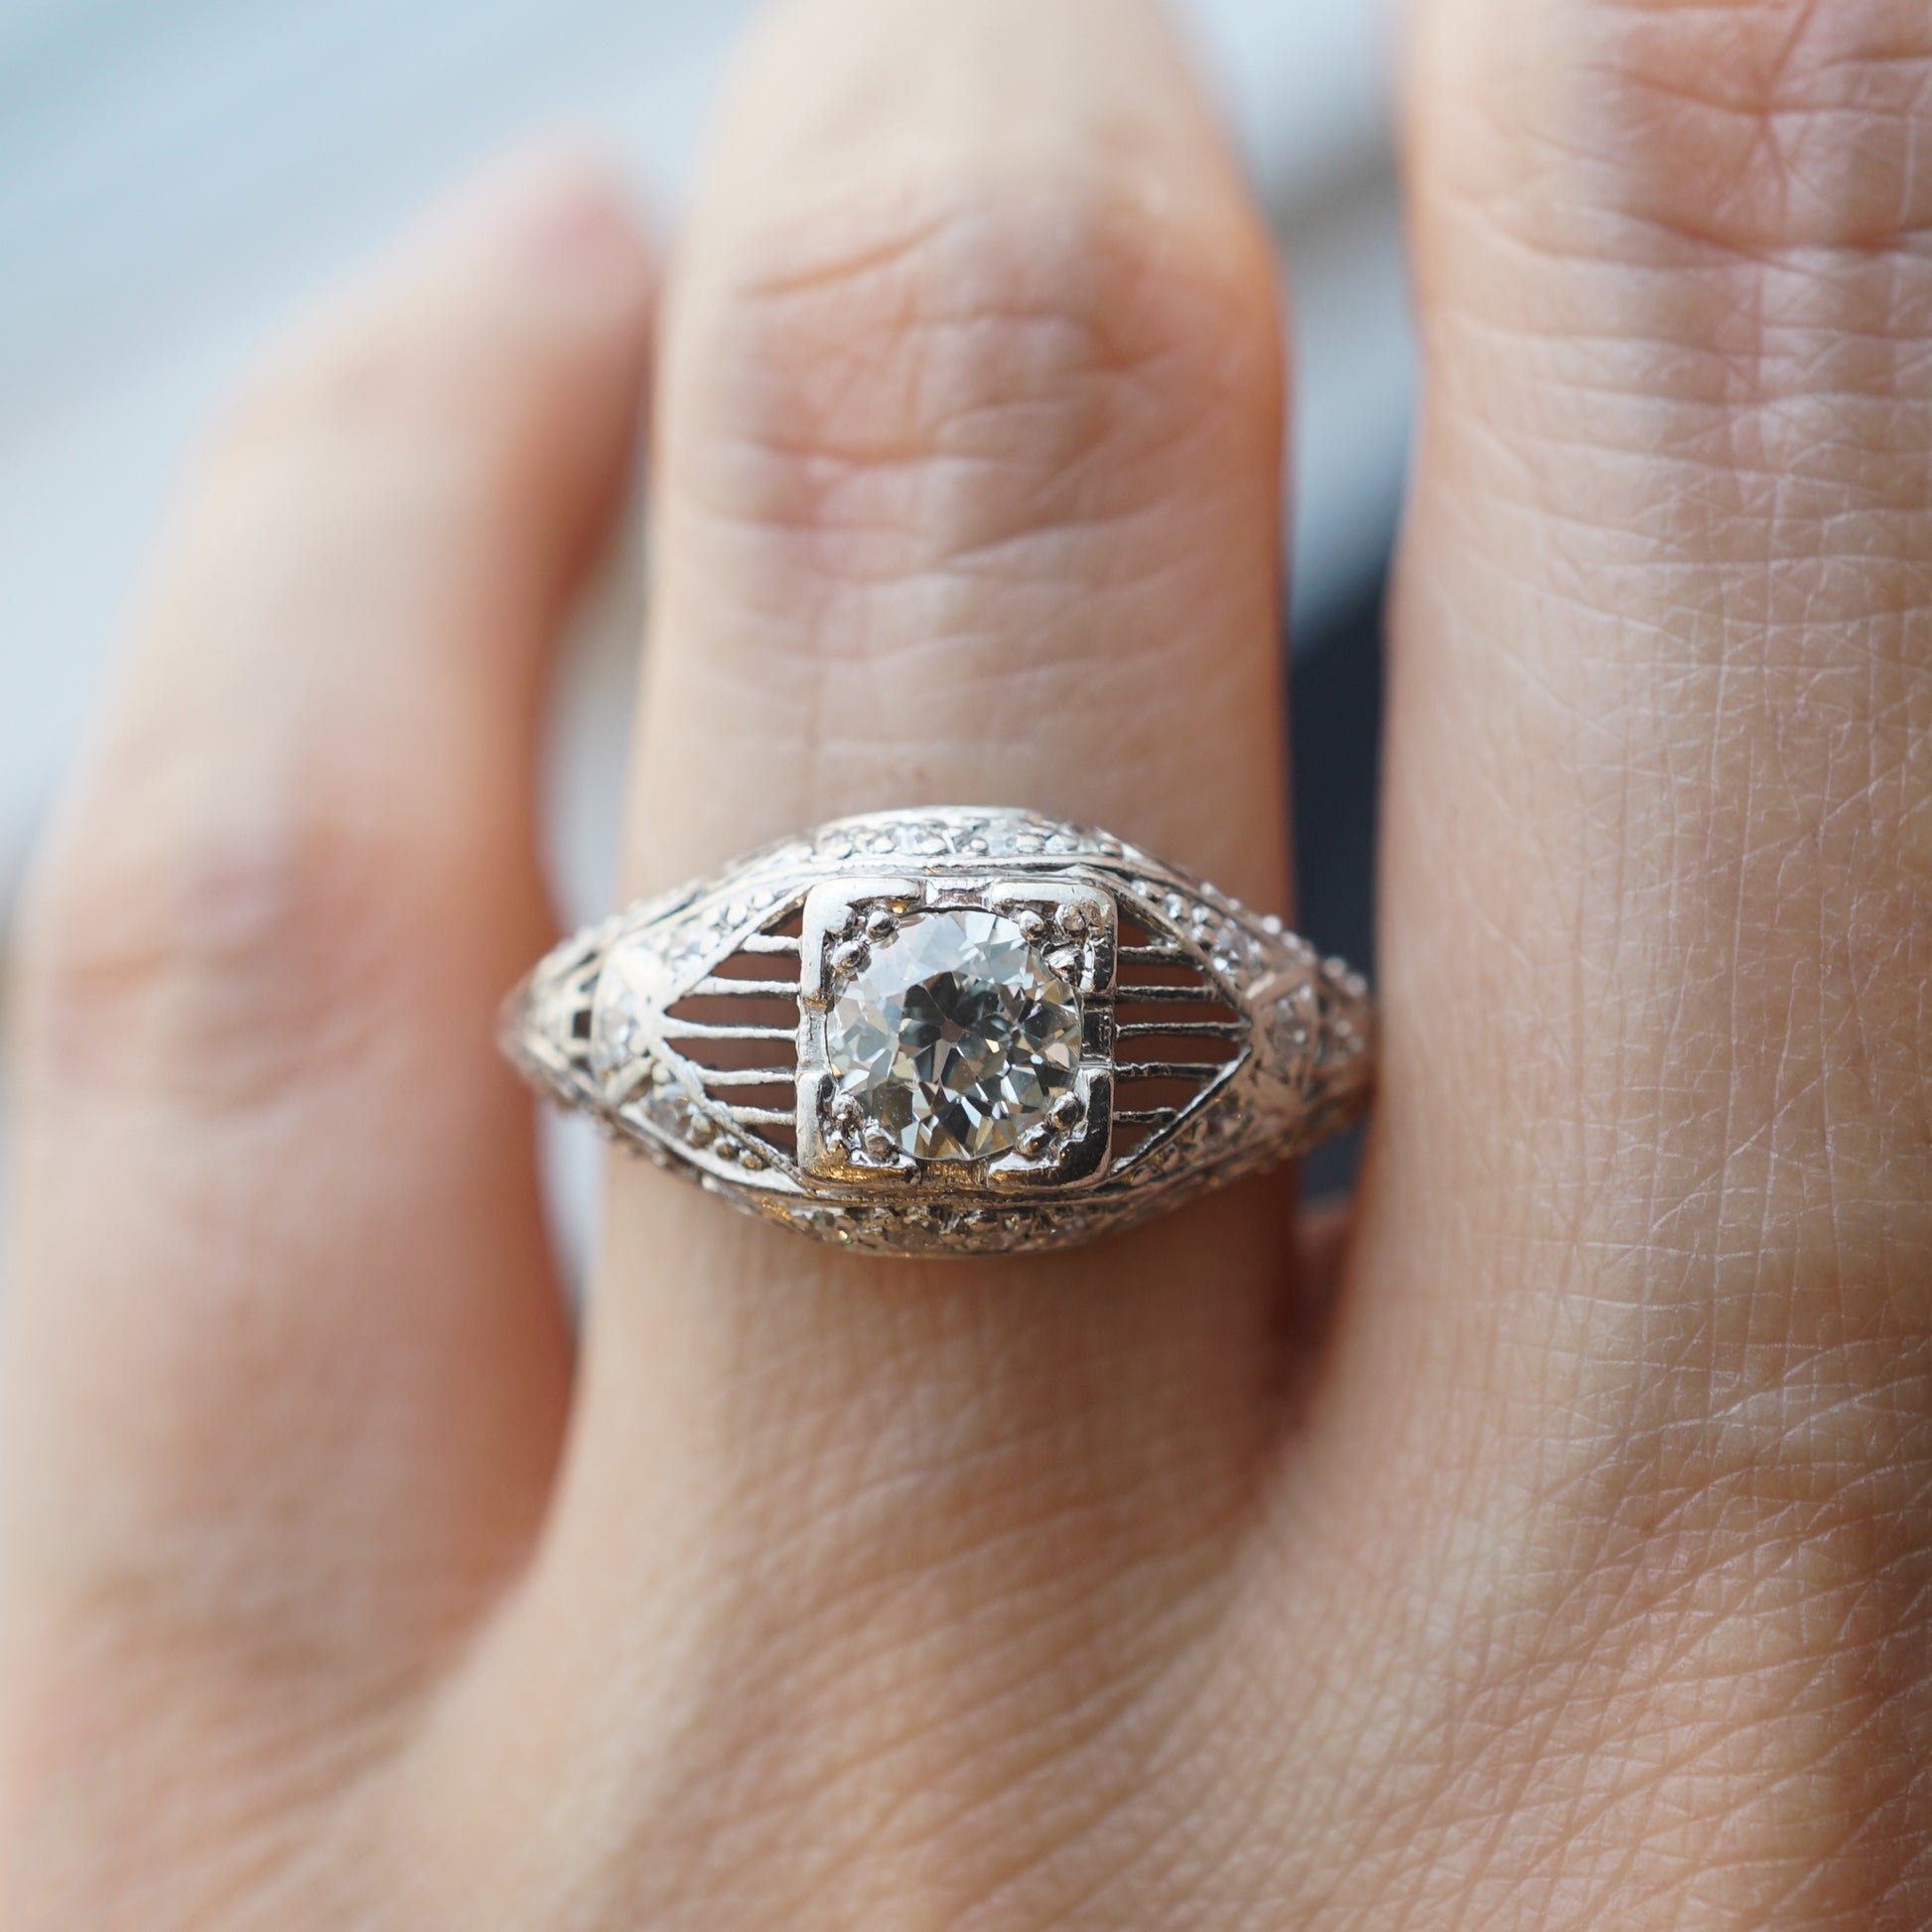 Intricate Art Deco Filigree Diamond Engagement Ring in Platinum